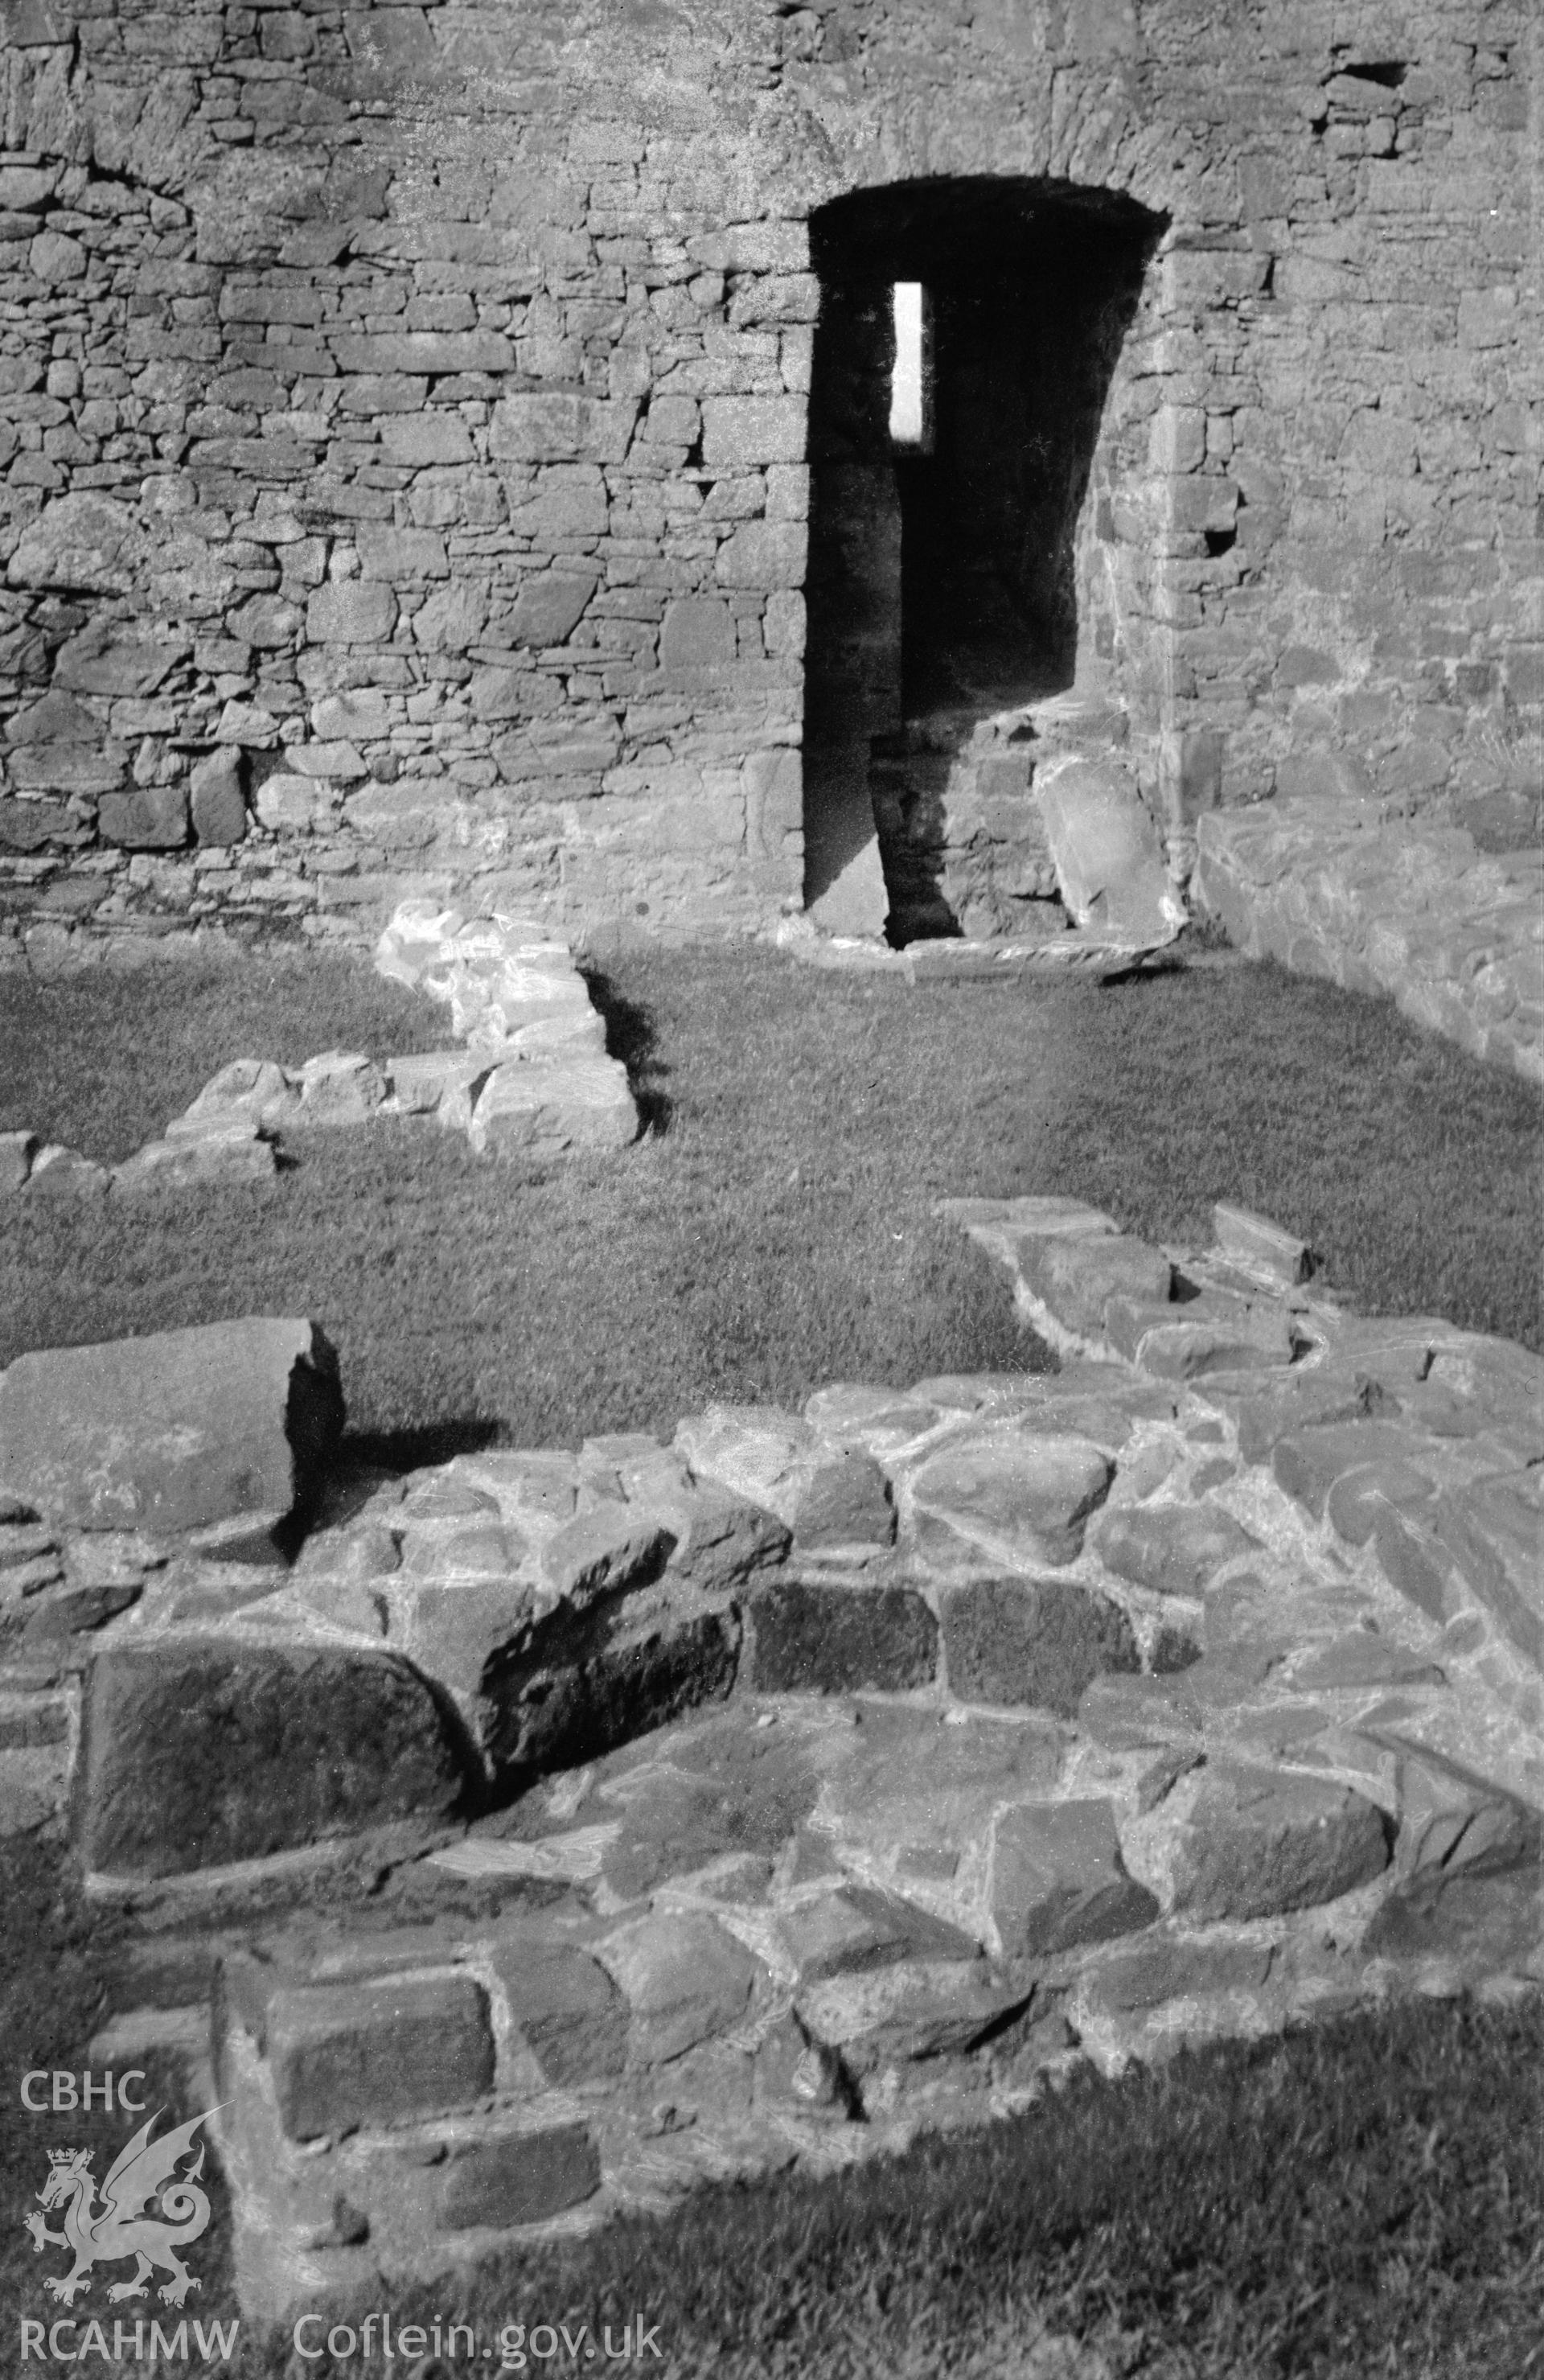 Photo showing Harlech Castle